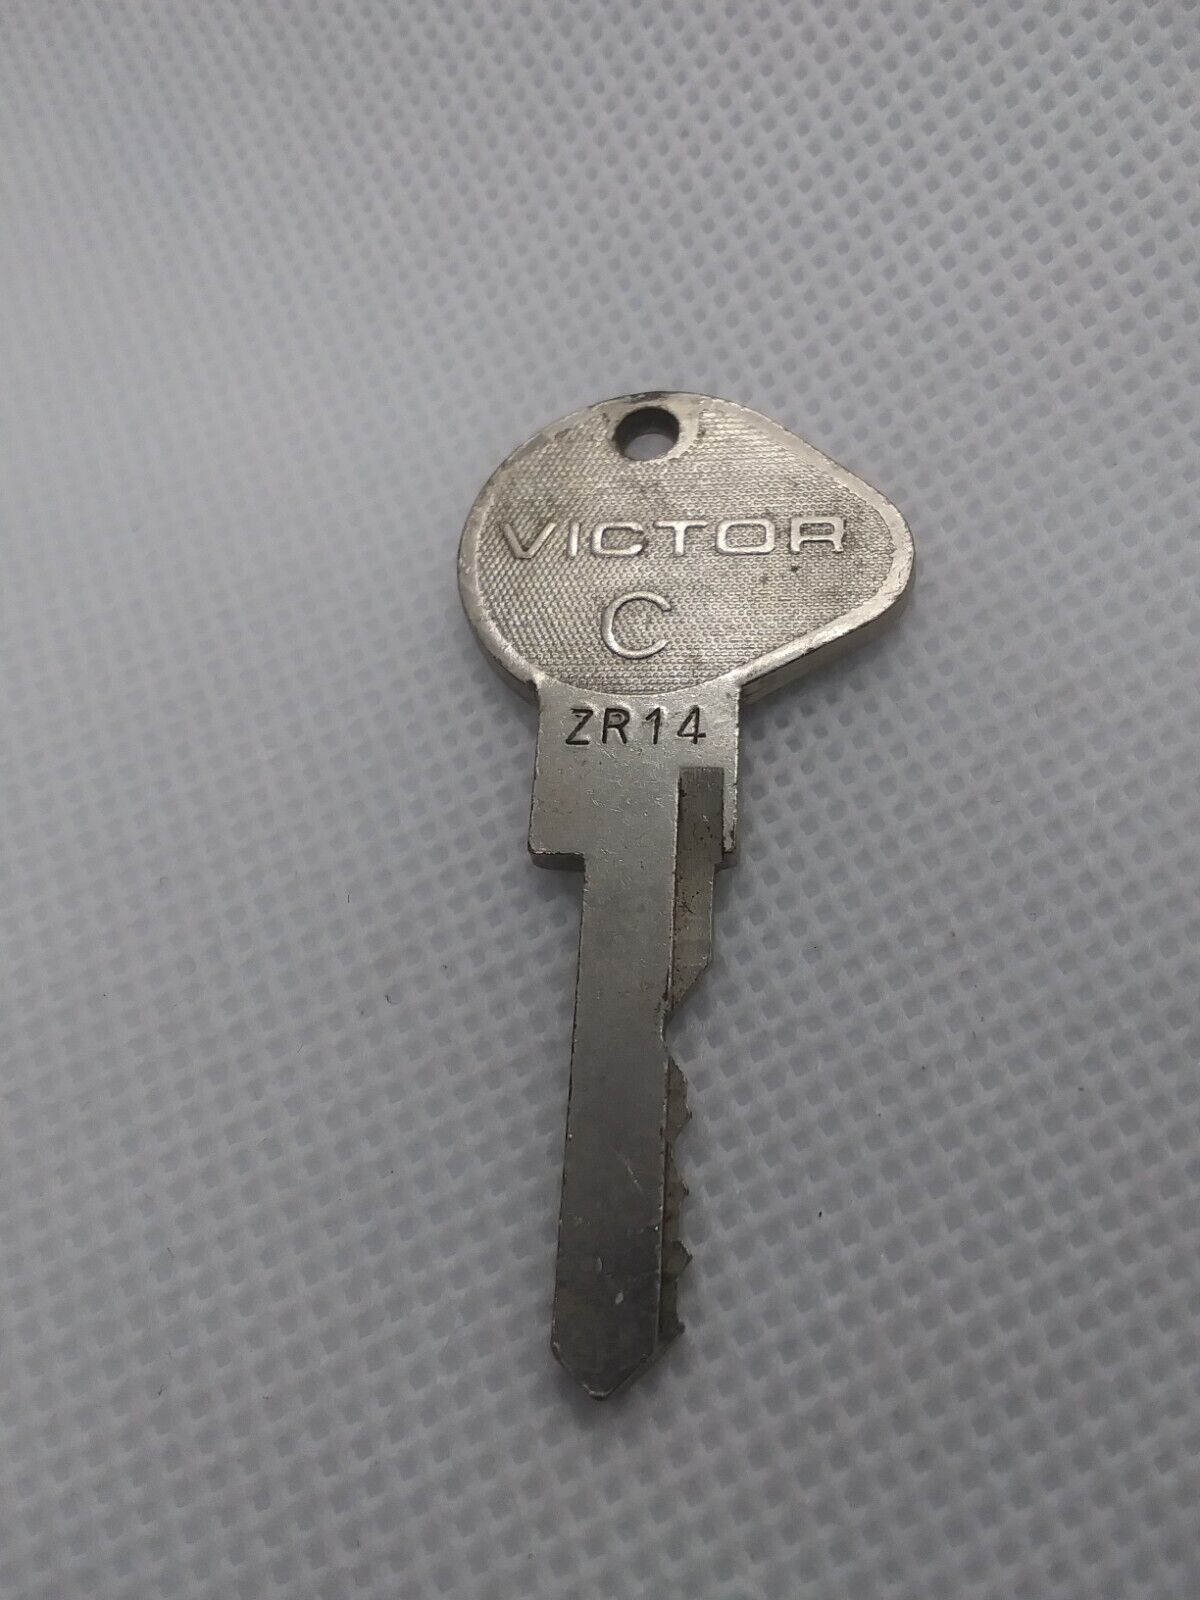 Vintage Victor C ZR14 Key